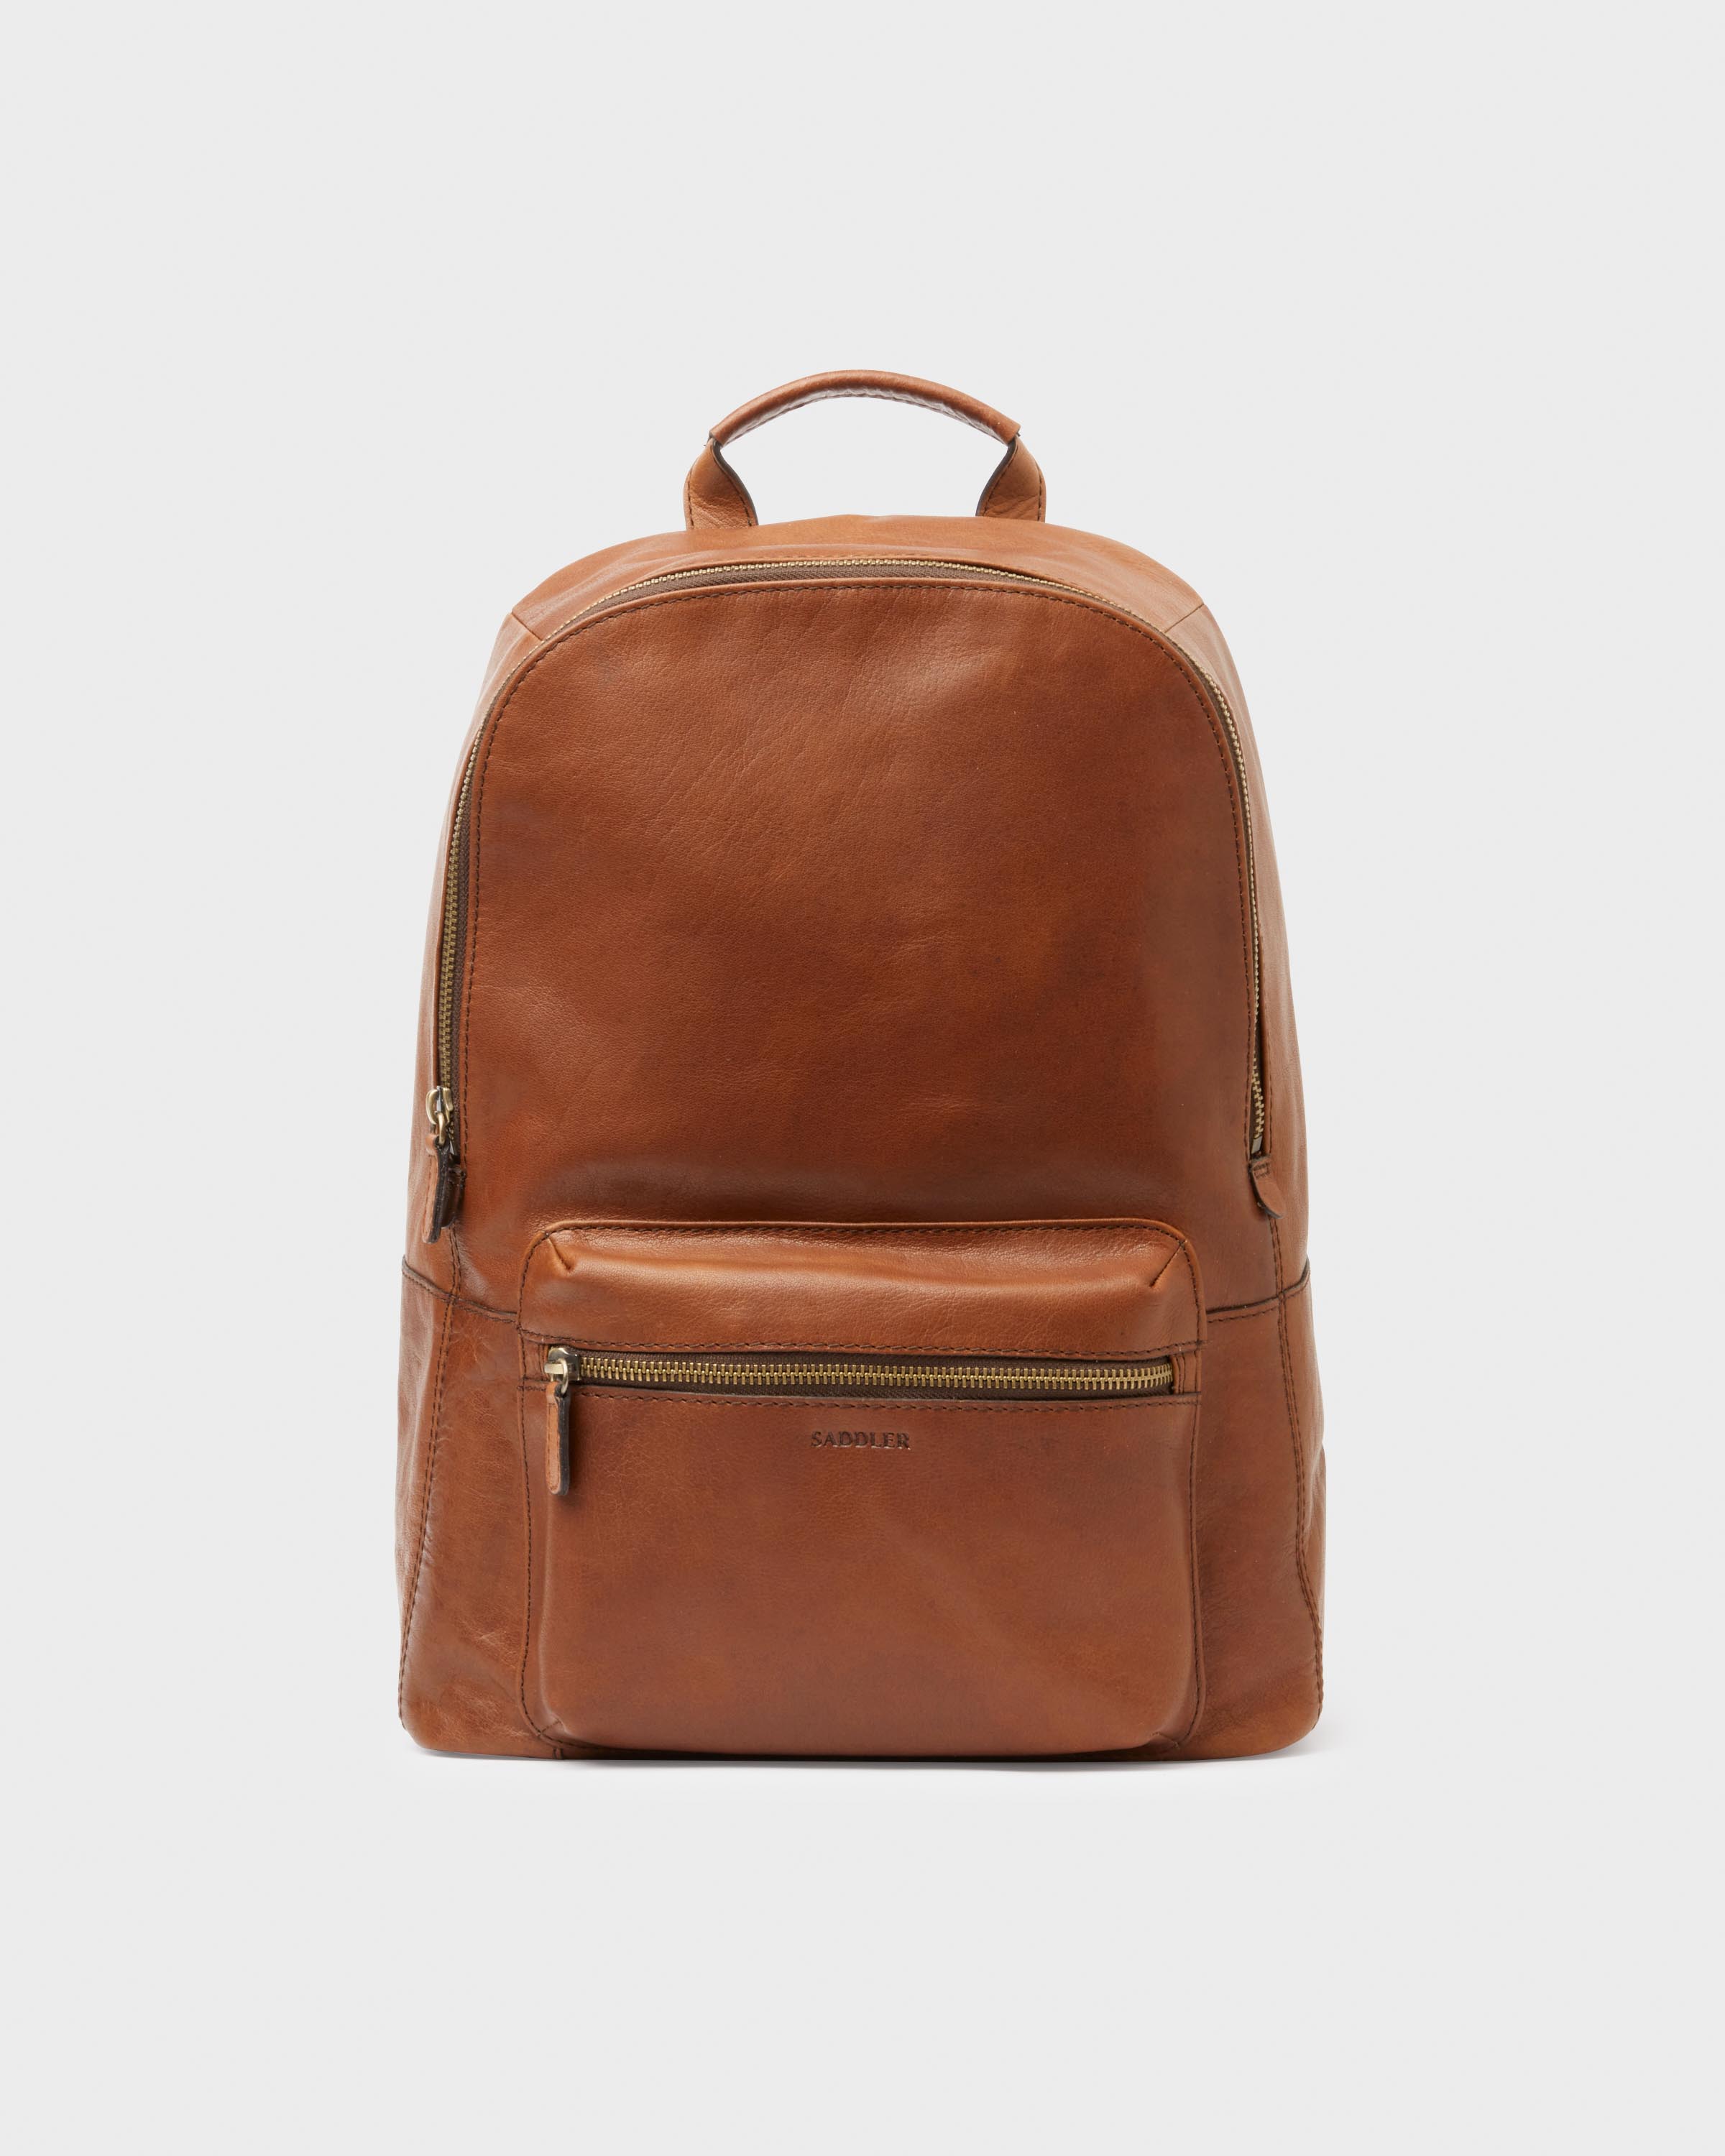 Buy Pedro computer bag at  - The swedish leather brand